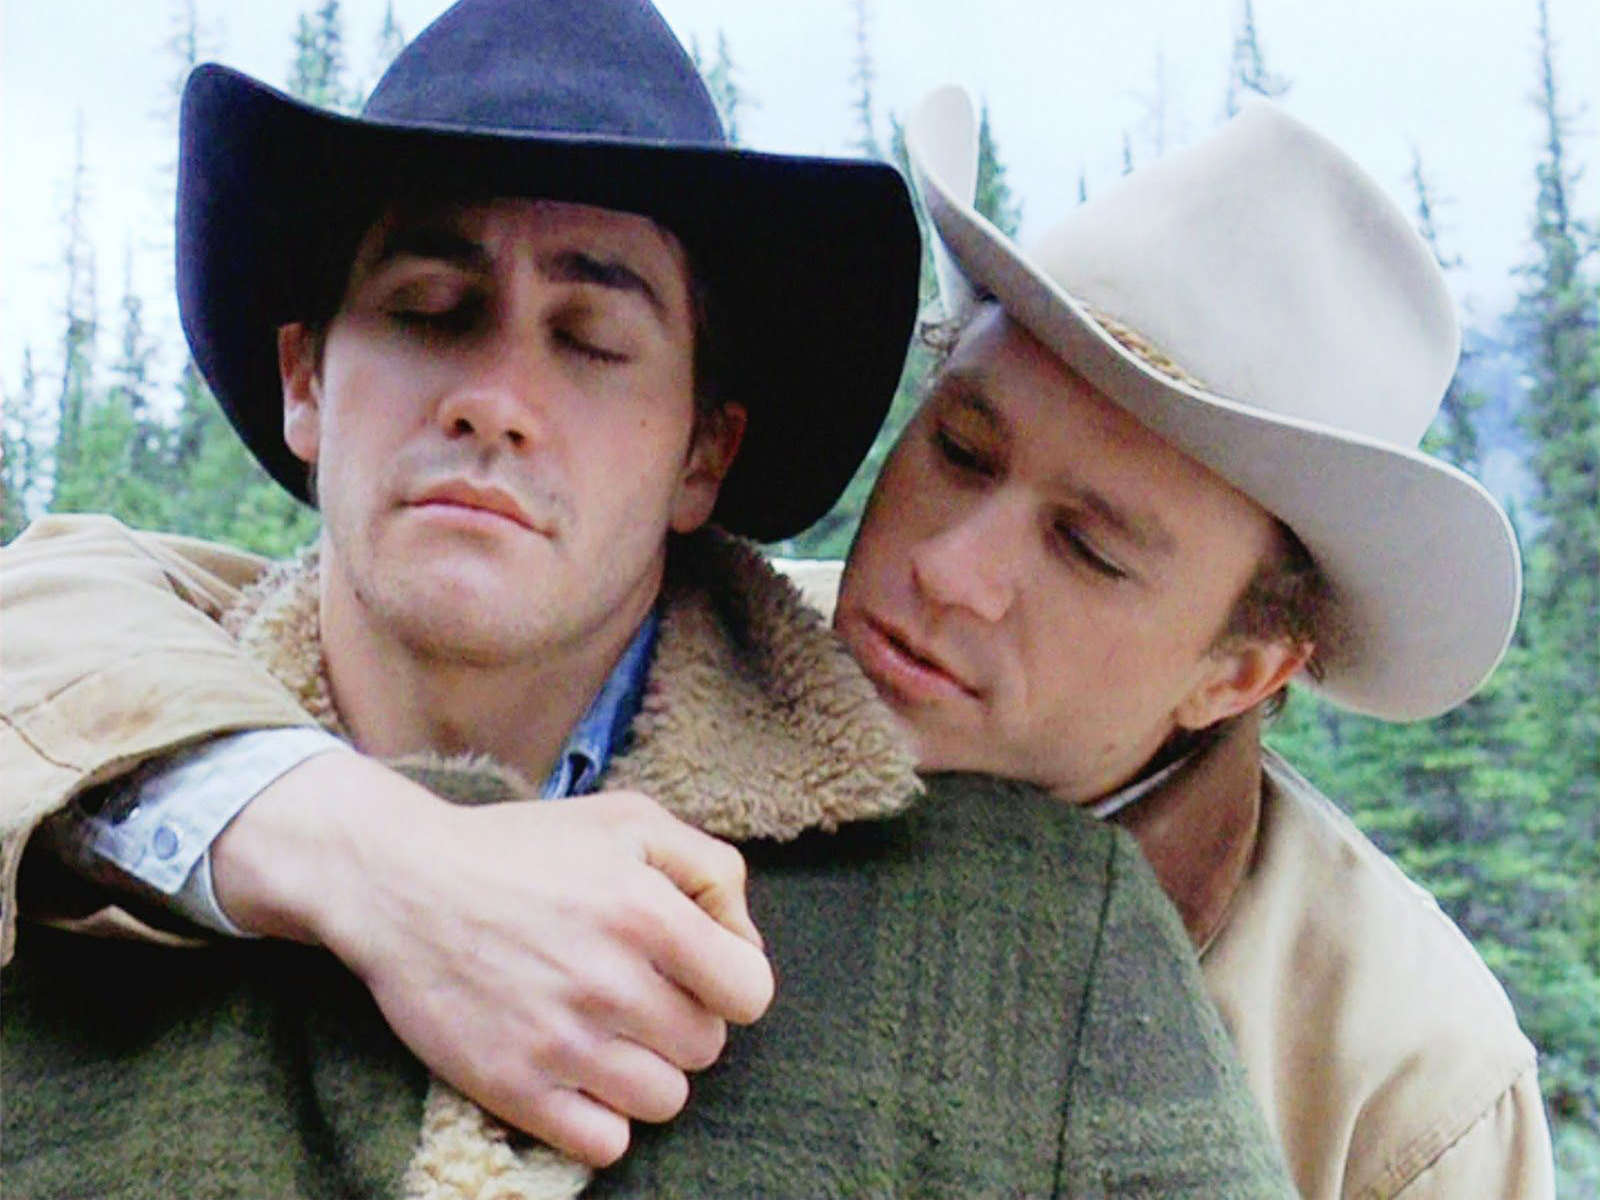 Heath Ledger and Jake Gyllenhaal in “Brokeback Mountain” (2005)